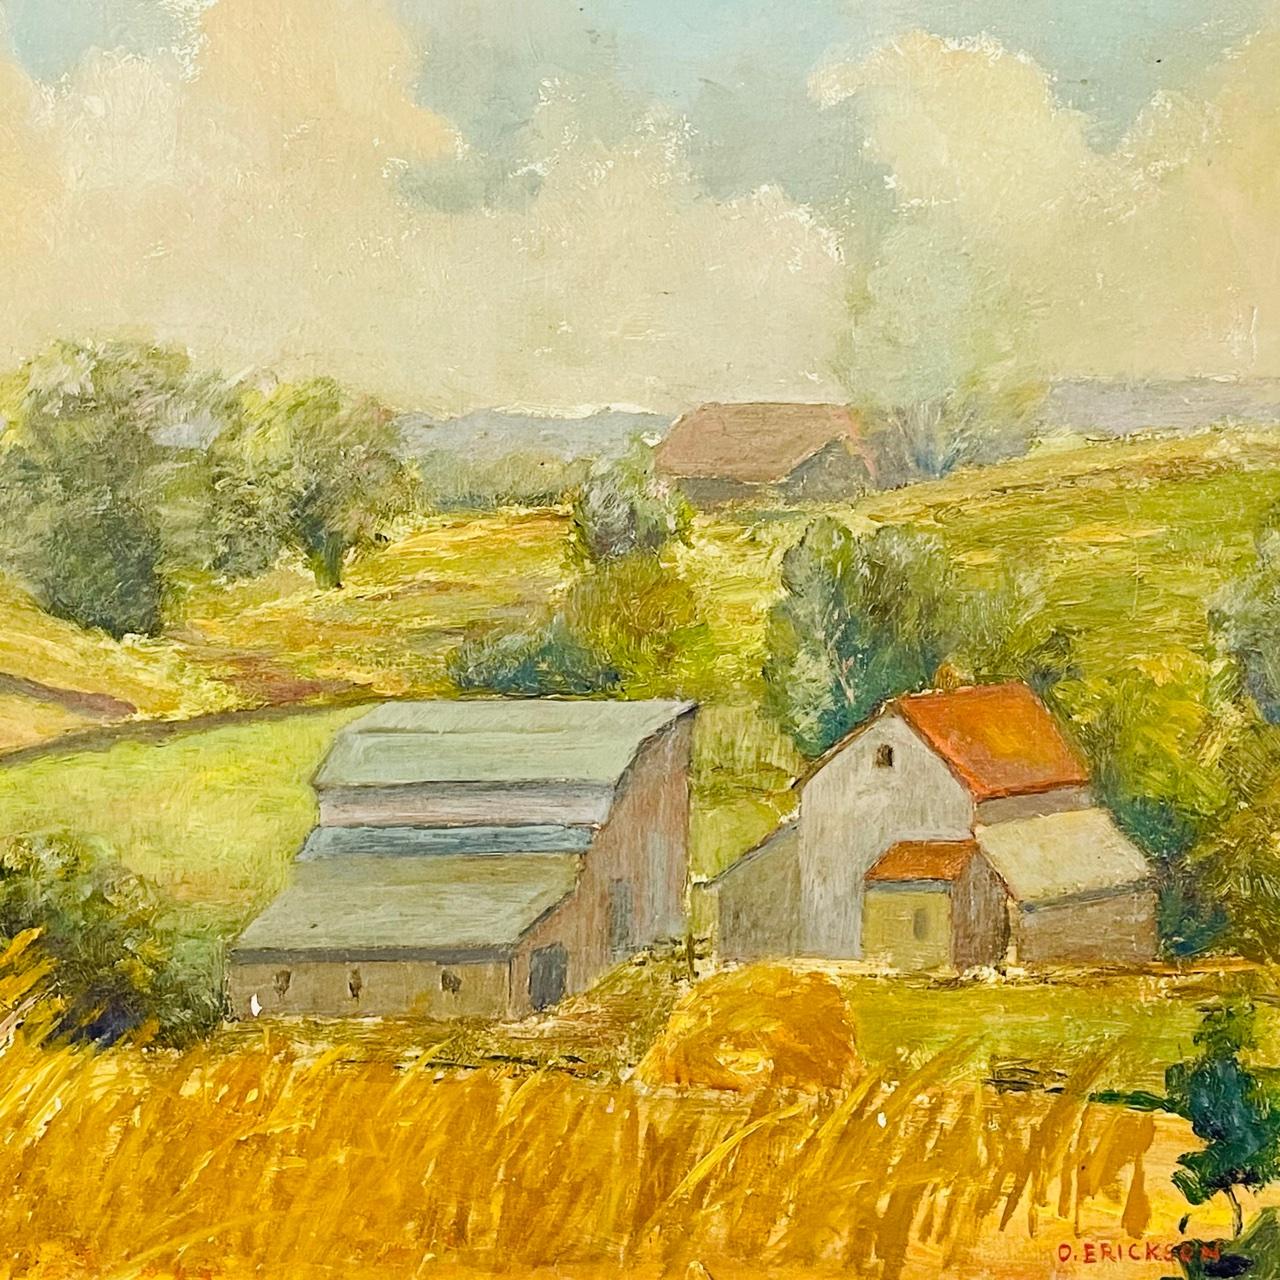 Prairie School Landscape Oil on Board Painting Signed O.Erickson